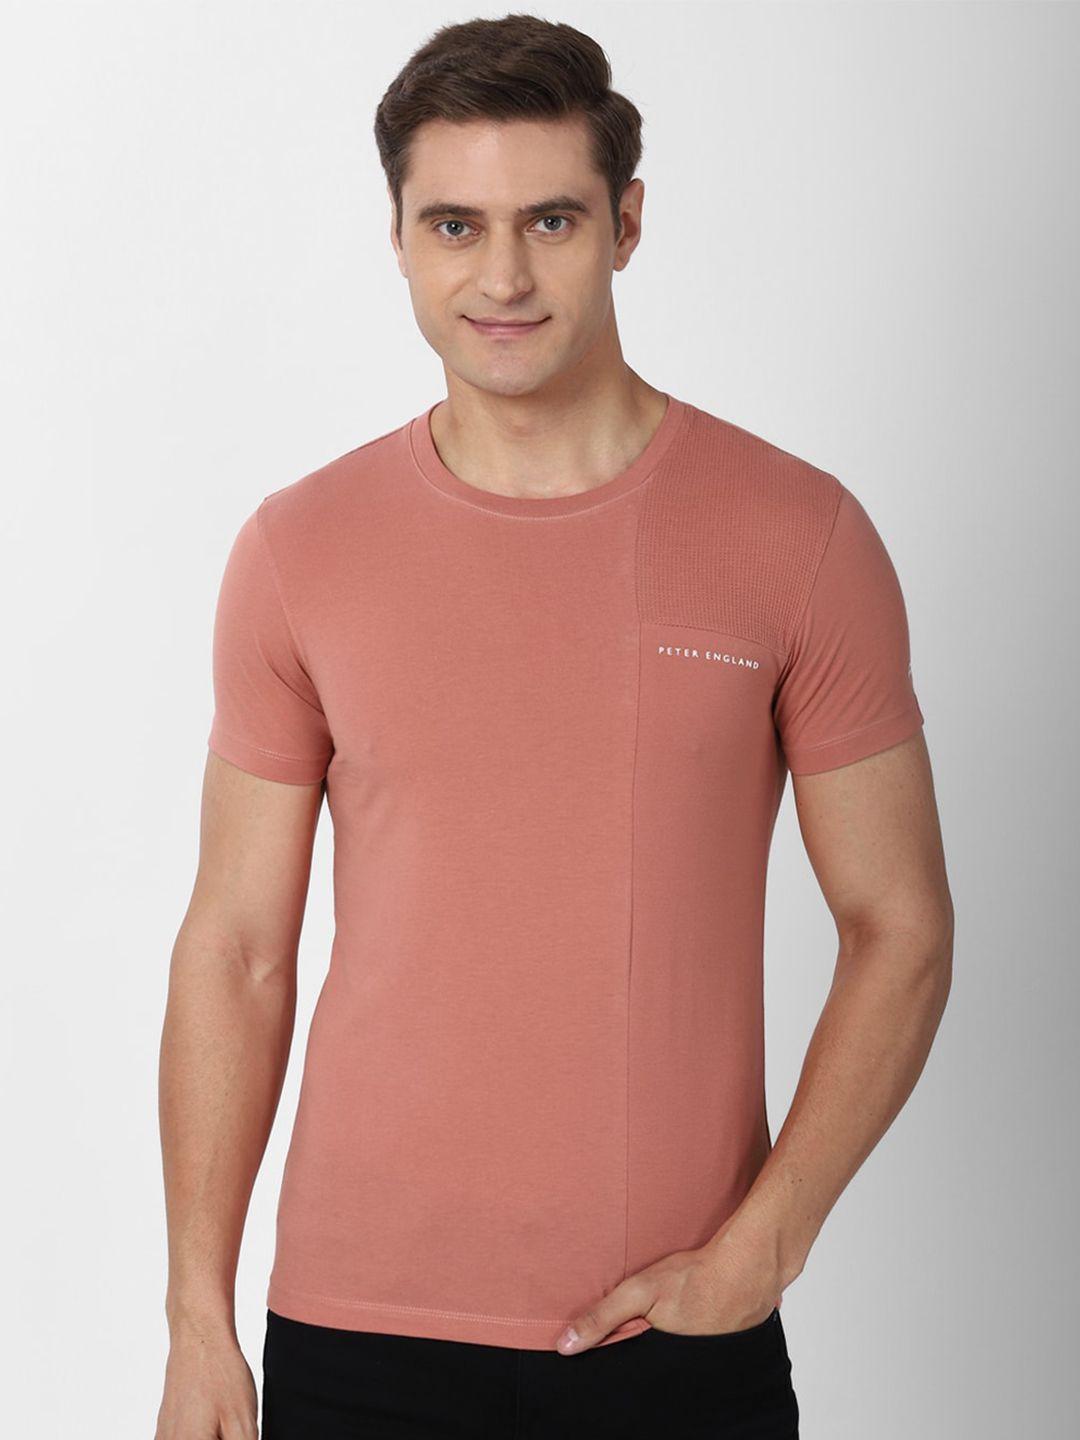 peter england casuals men peach-coloured slim fit t-shirt